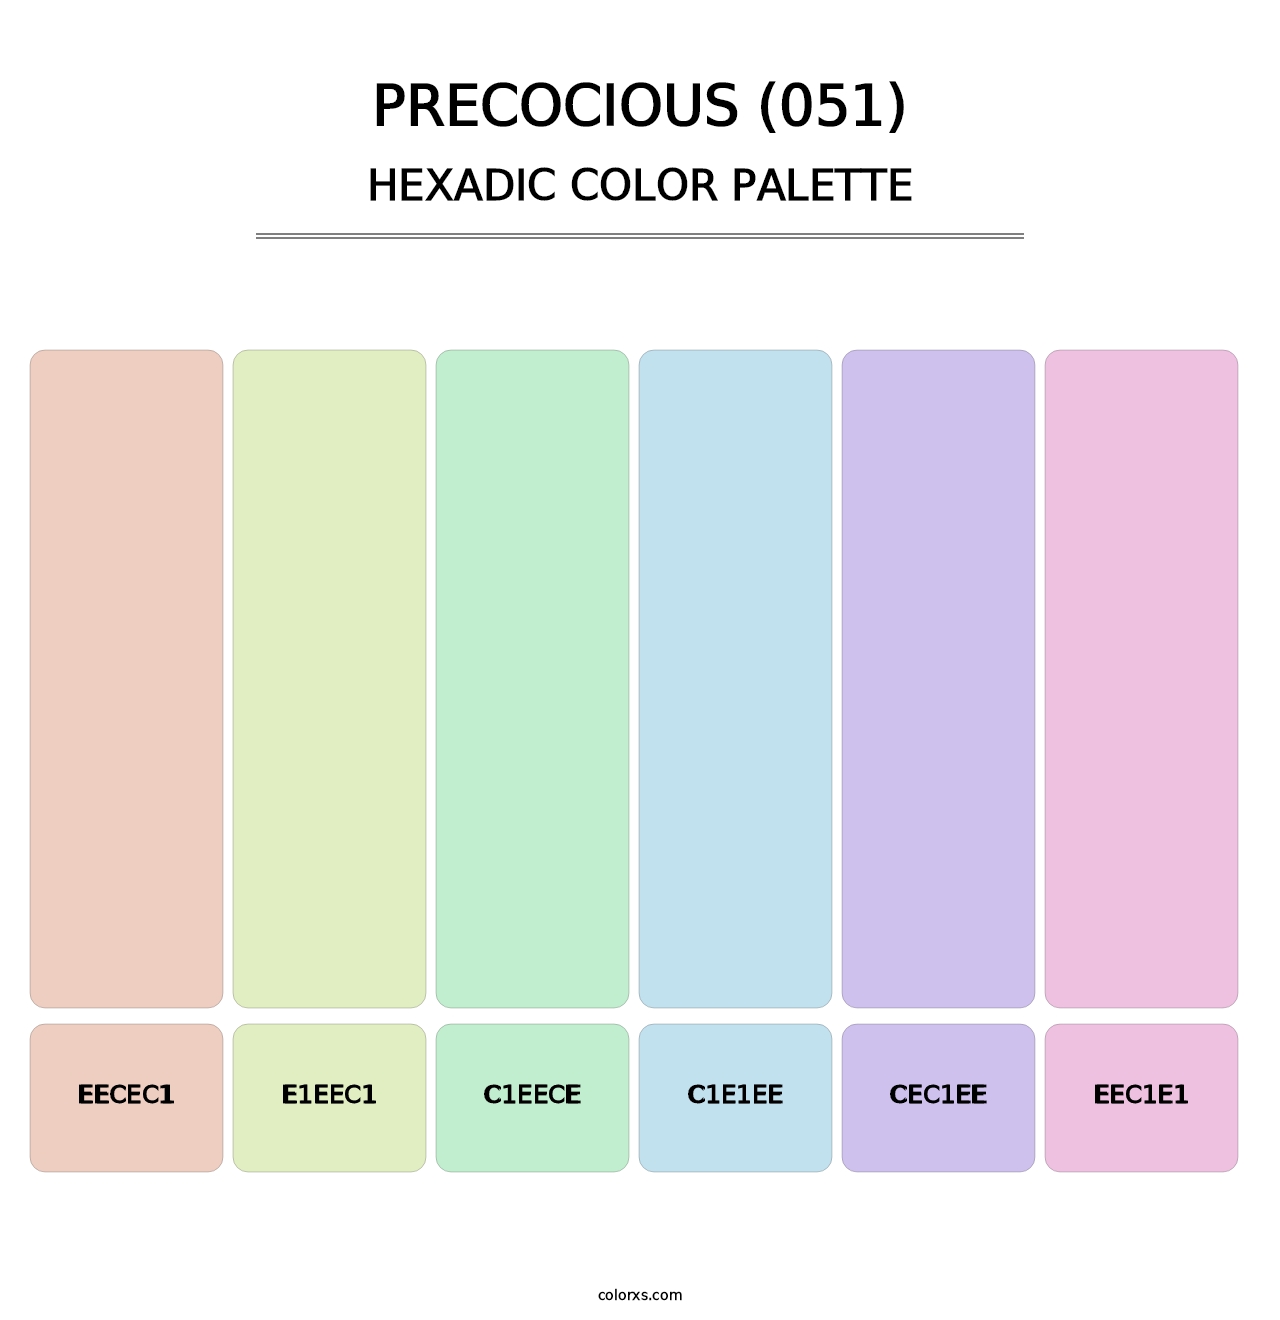 Precocious (051) - Hexadic Color Palette